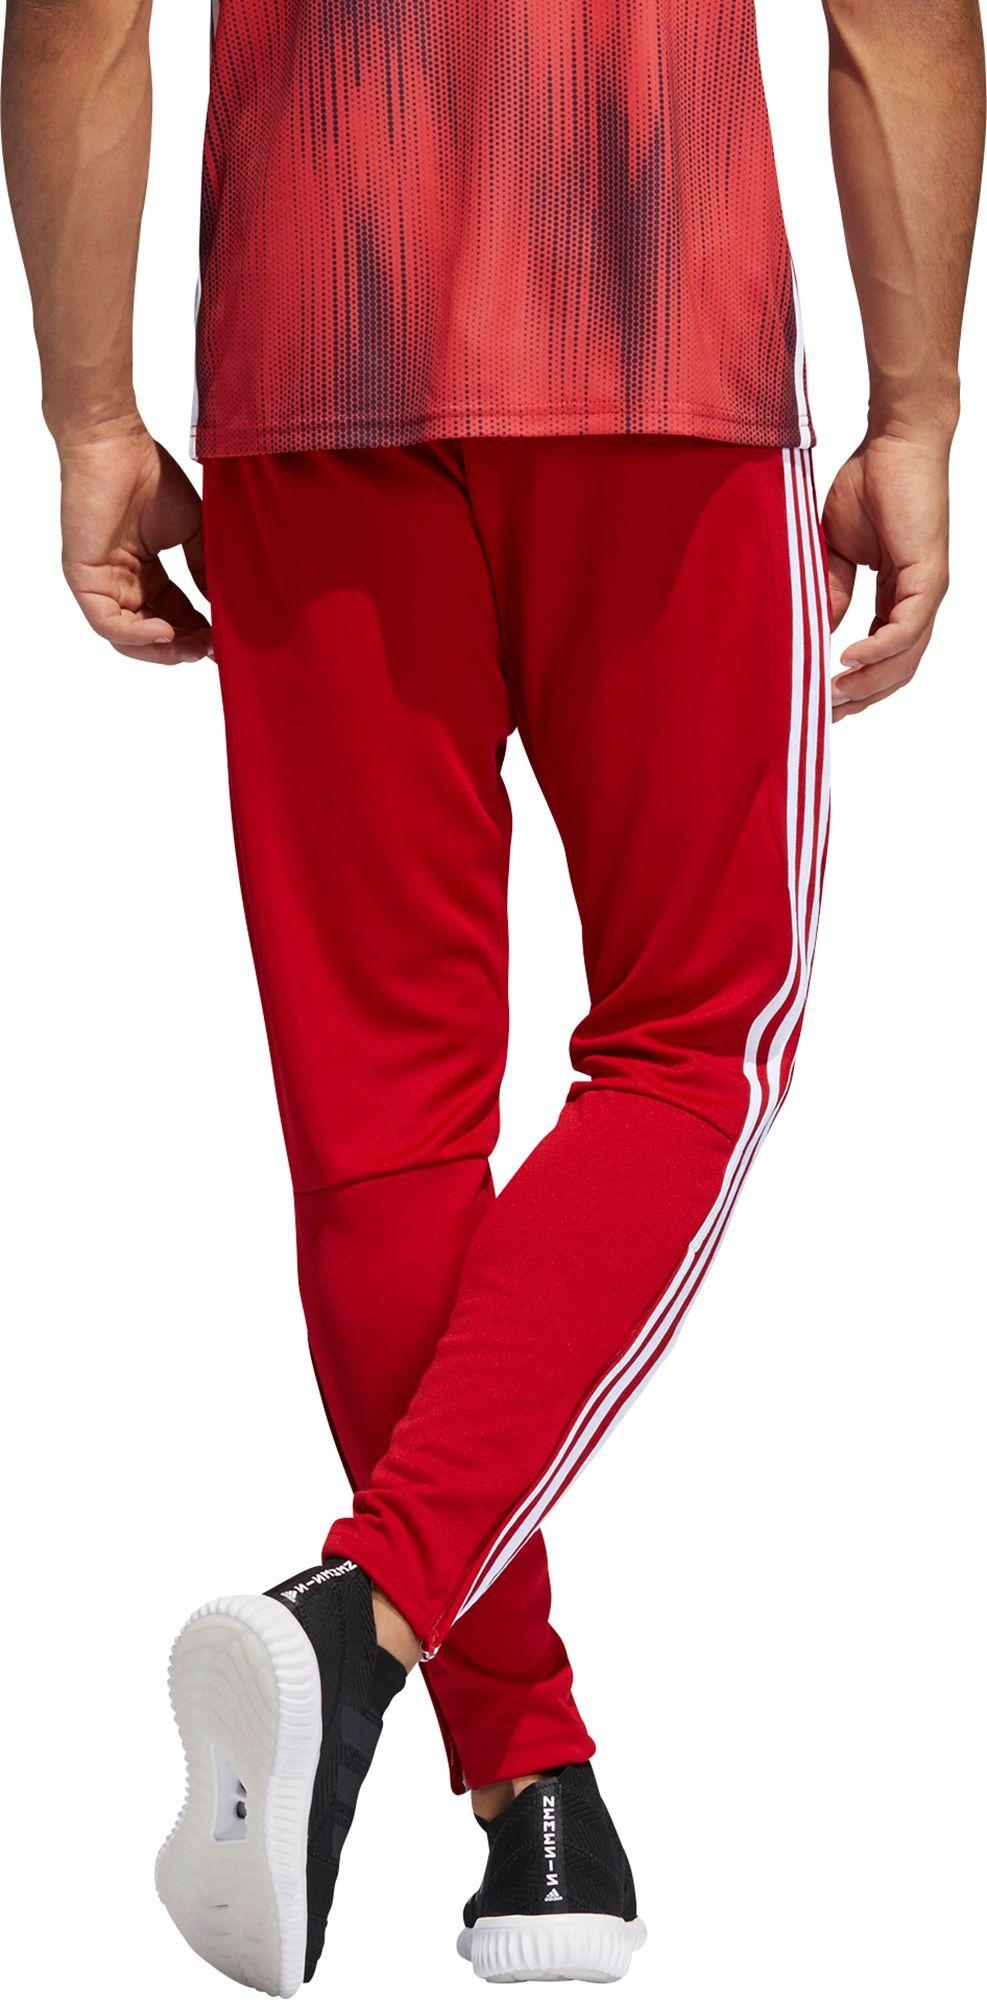 adidas Tiro 19 Training Pants in Red for Men - Lyst